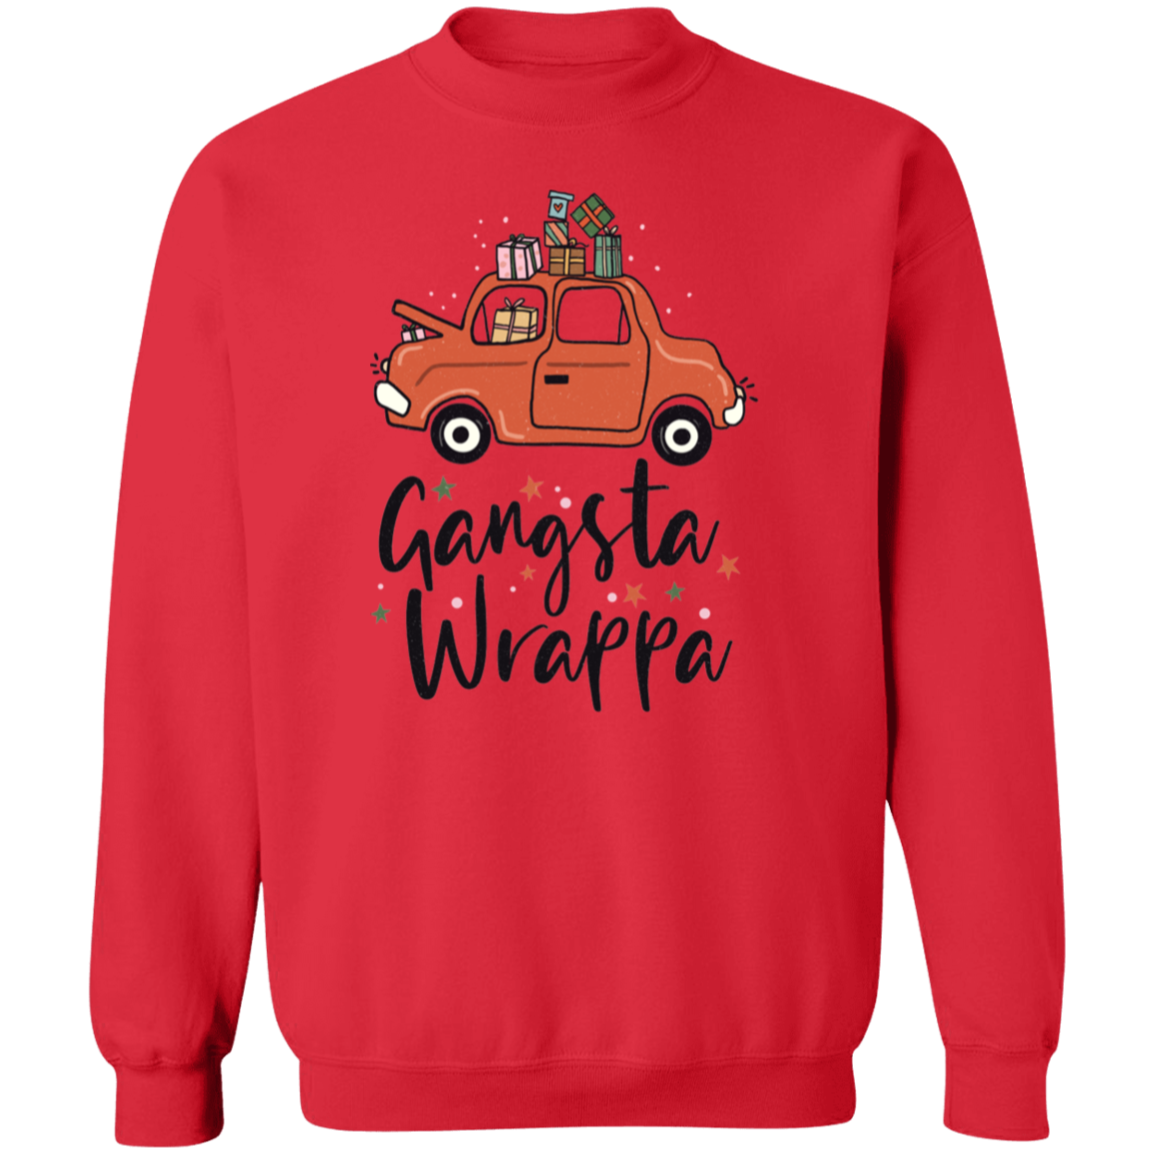 Gansta Wrappa Sweatshirt